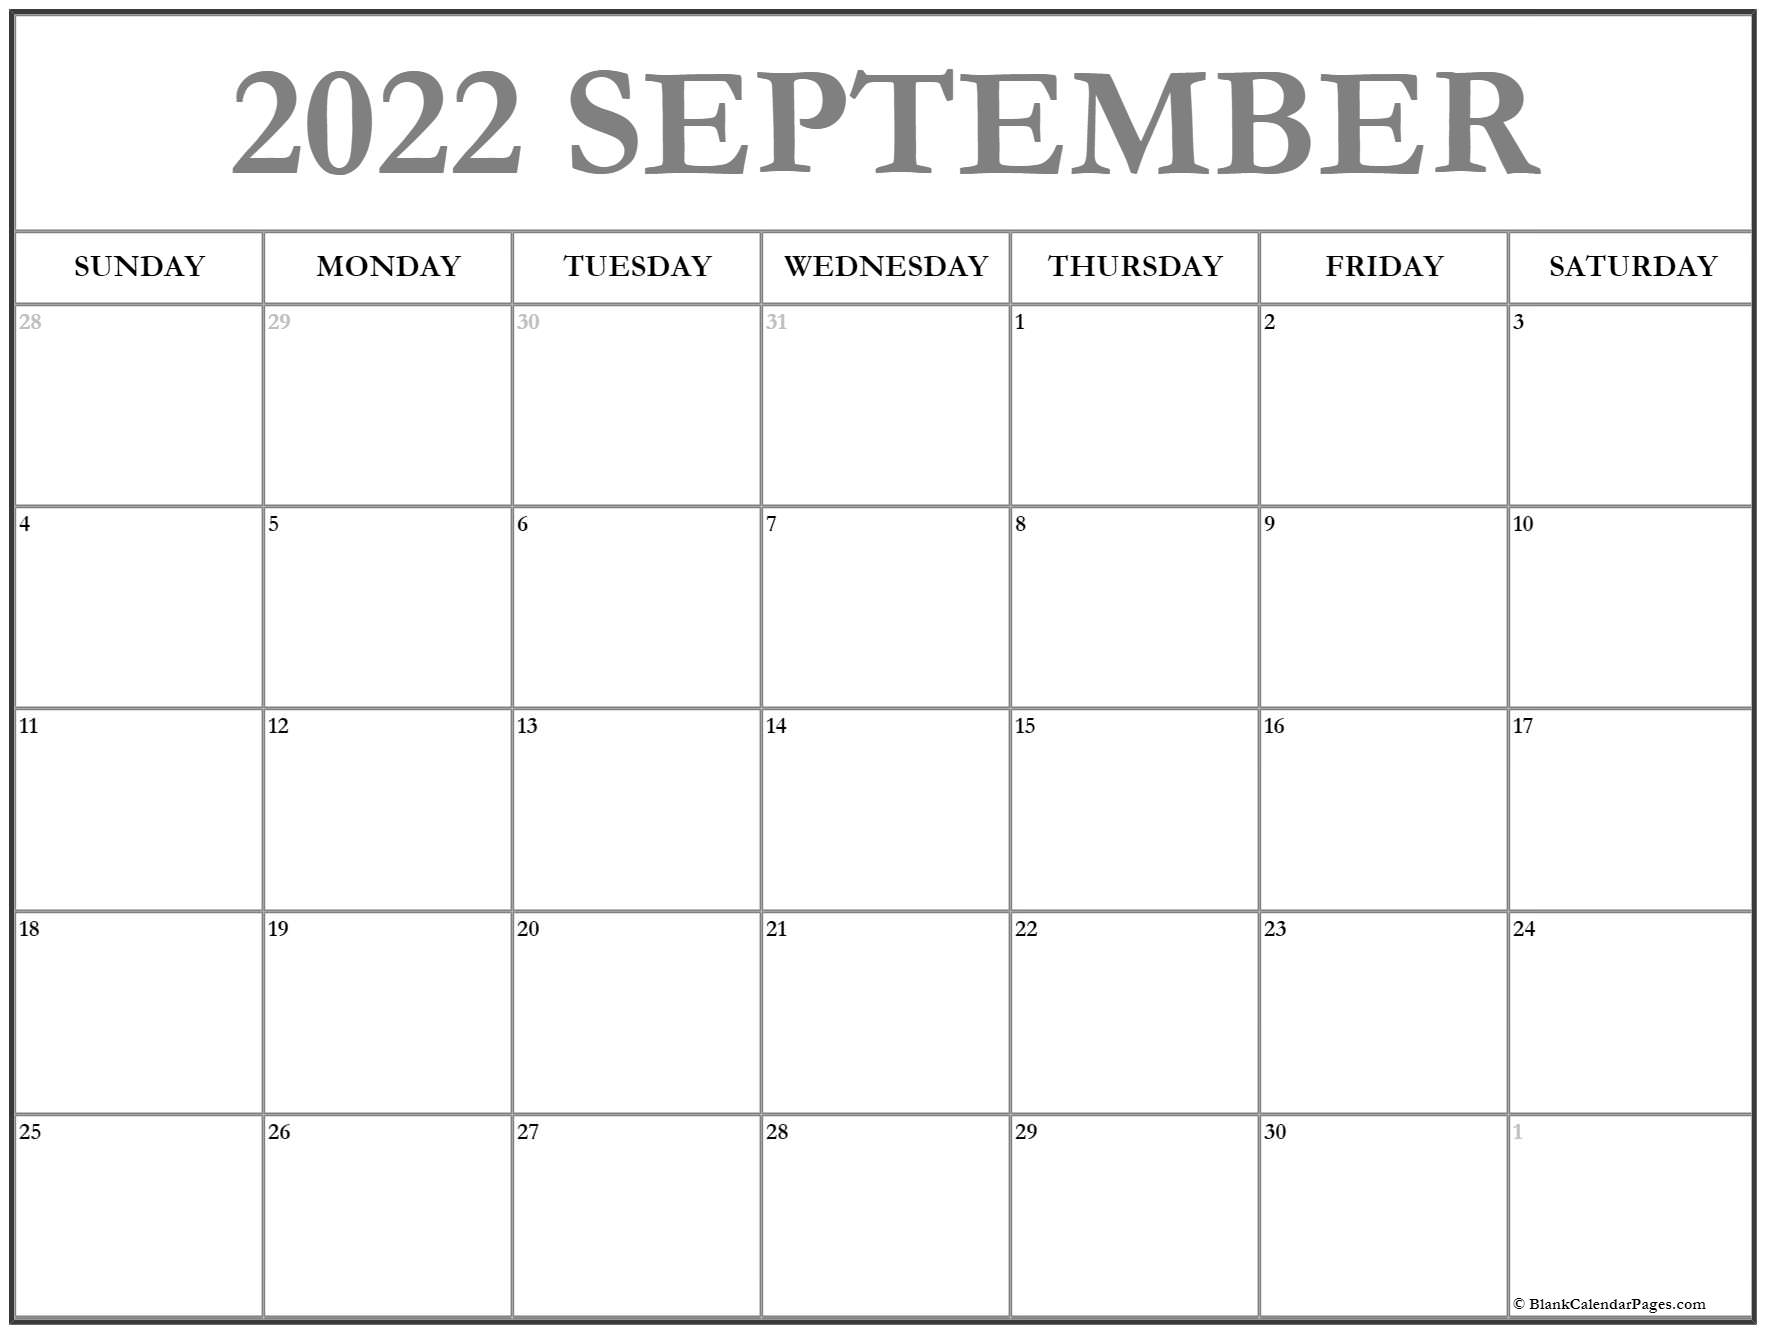 Get Calendar 2022 Sept